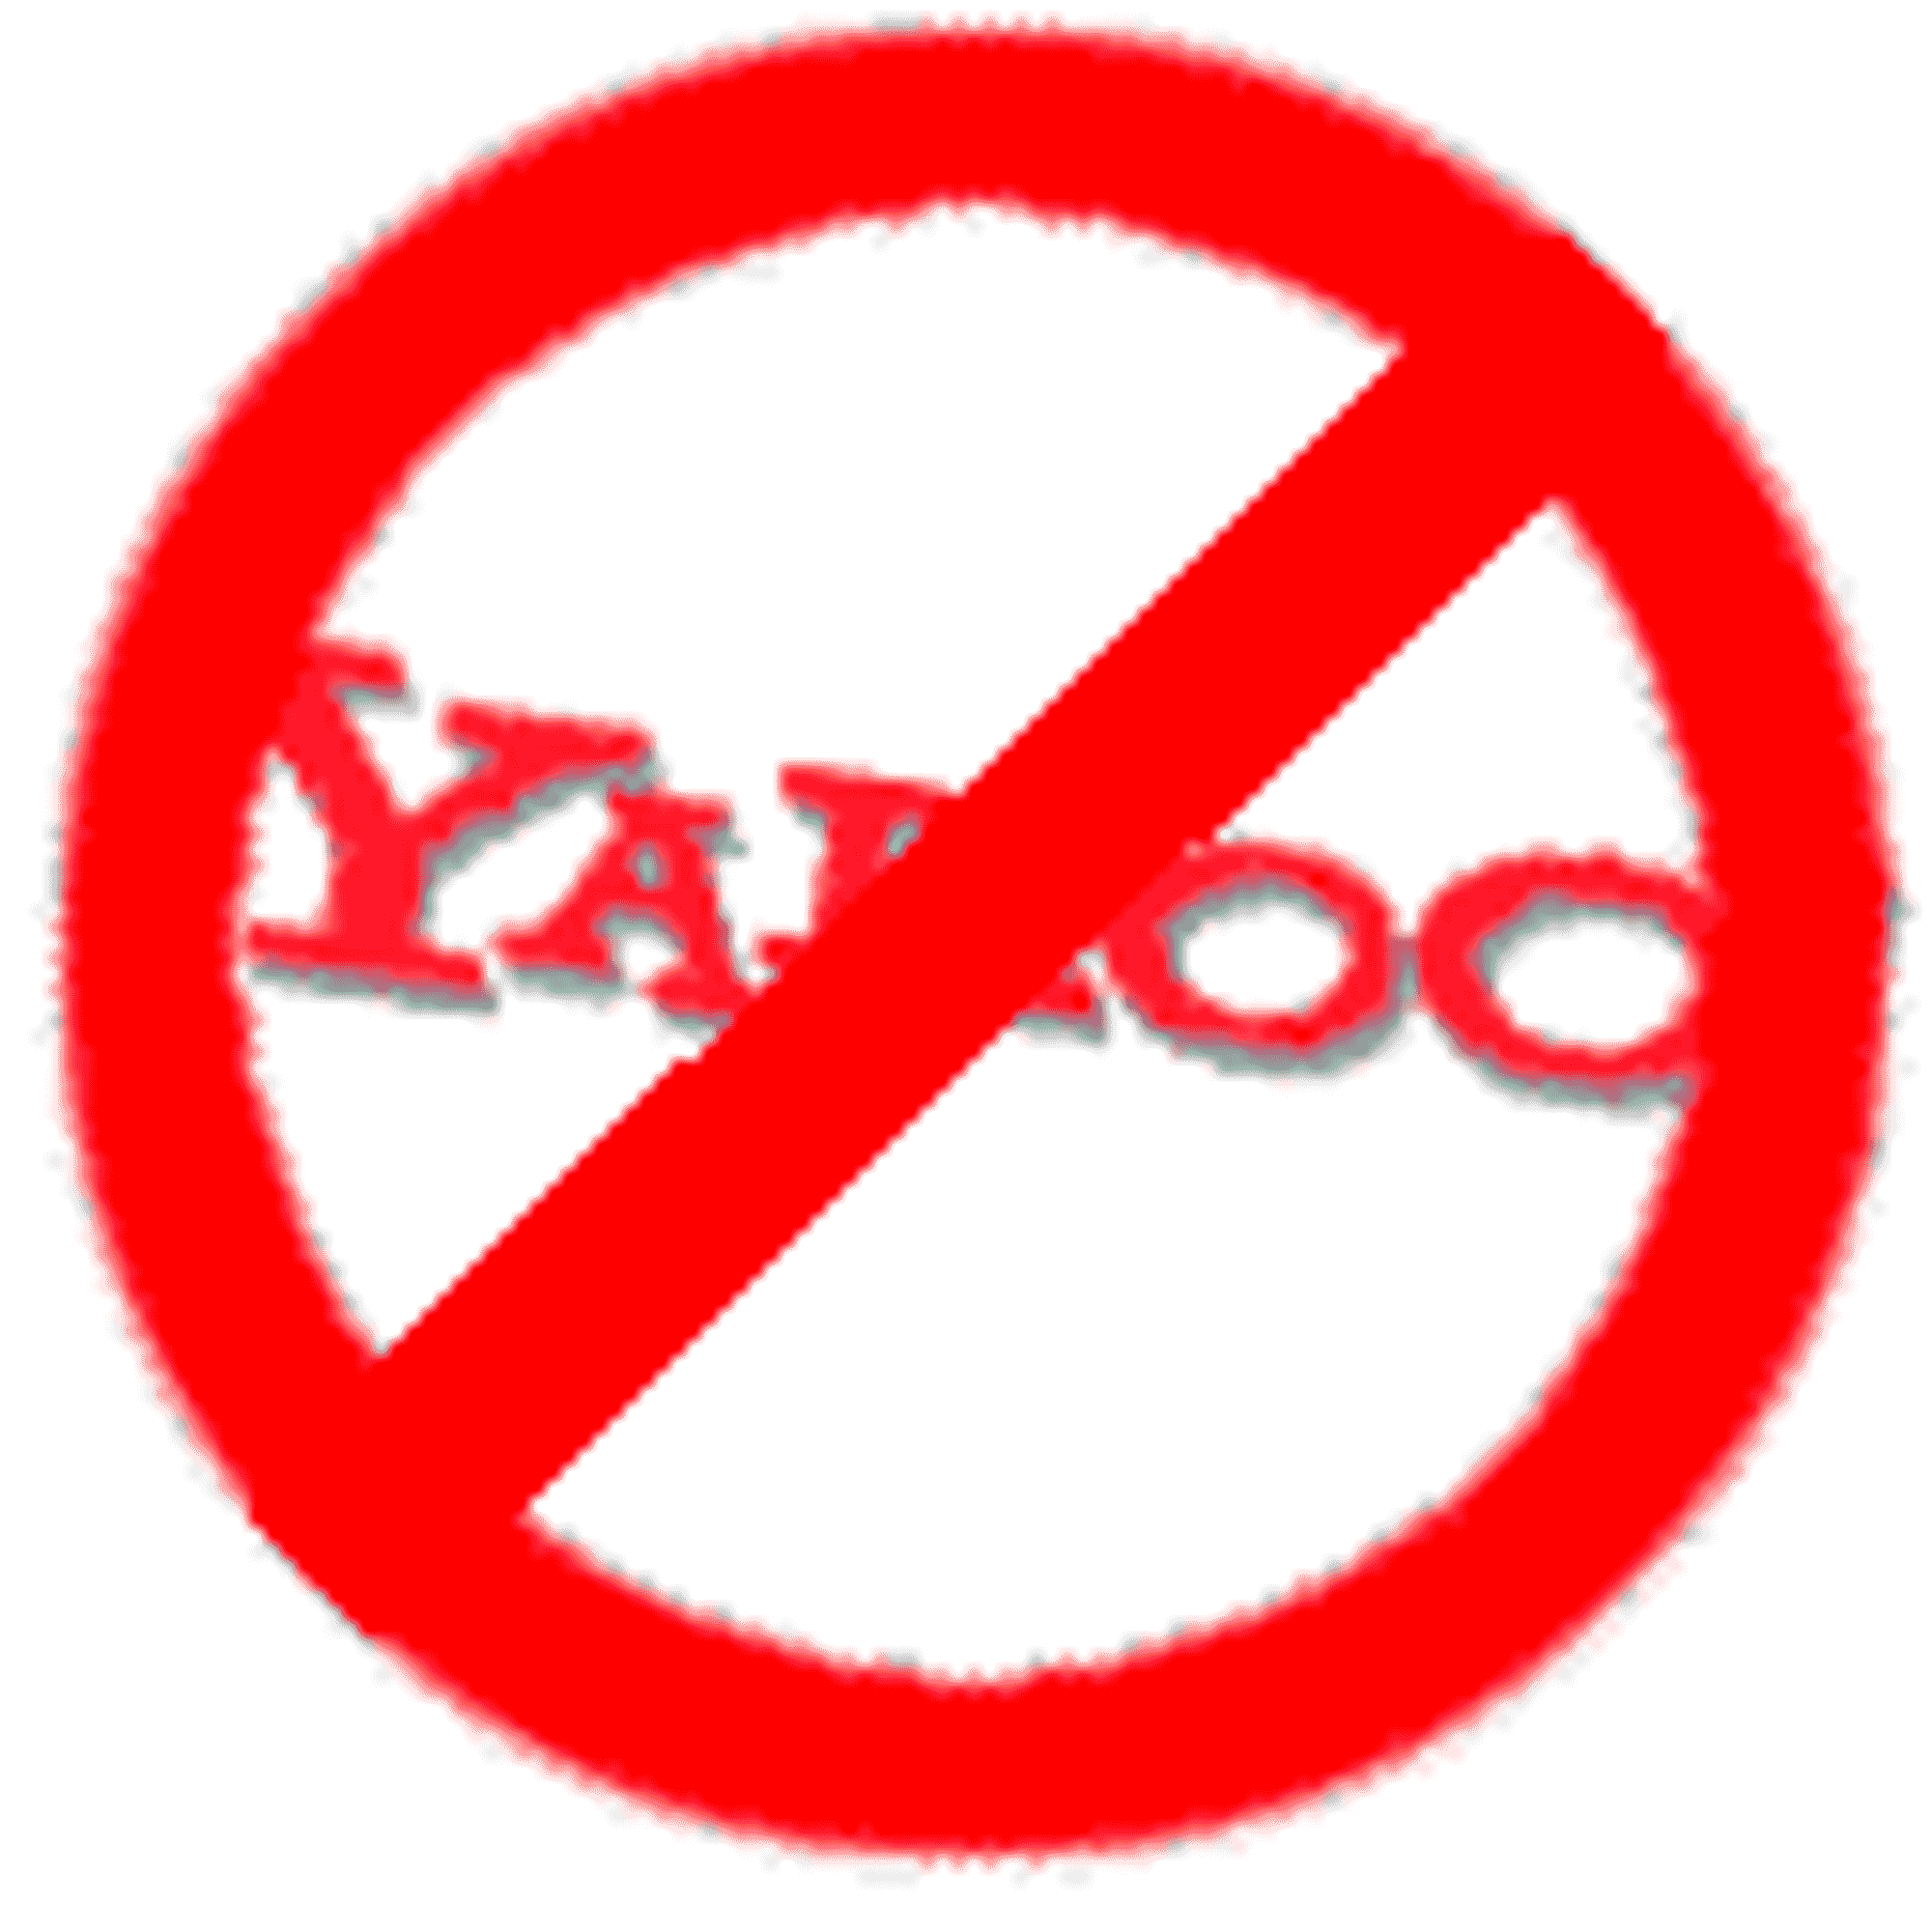 Yahoo!-forbud.